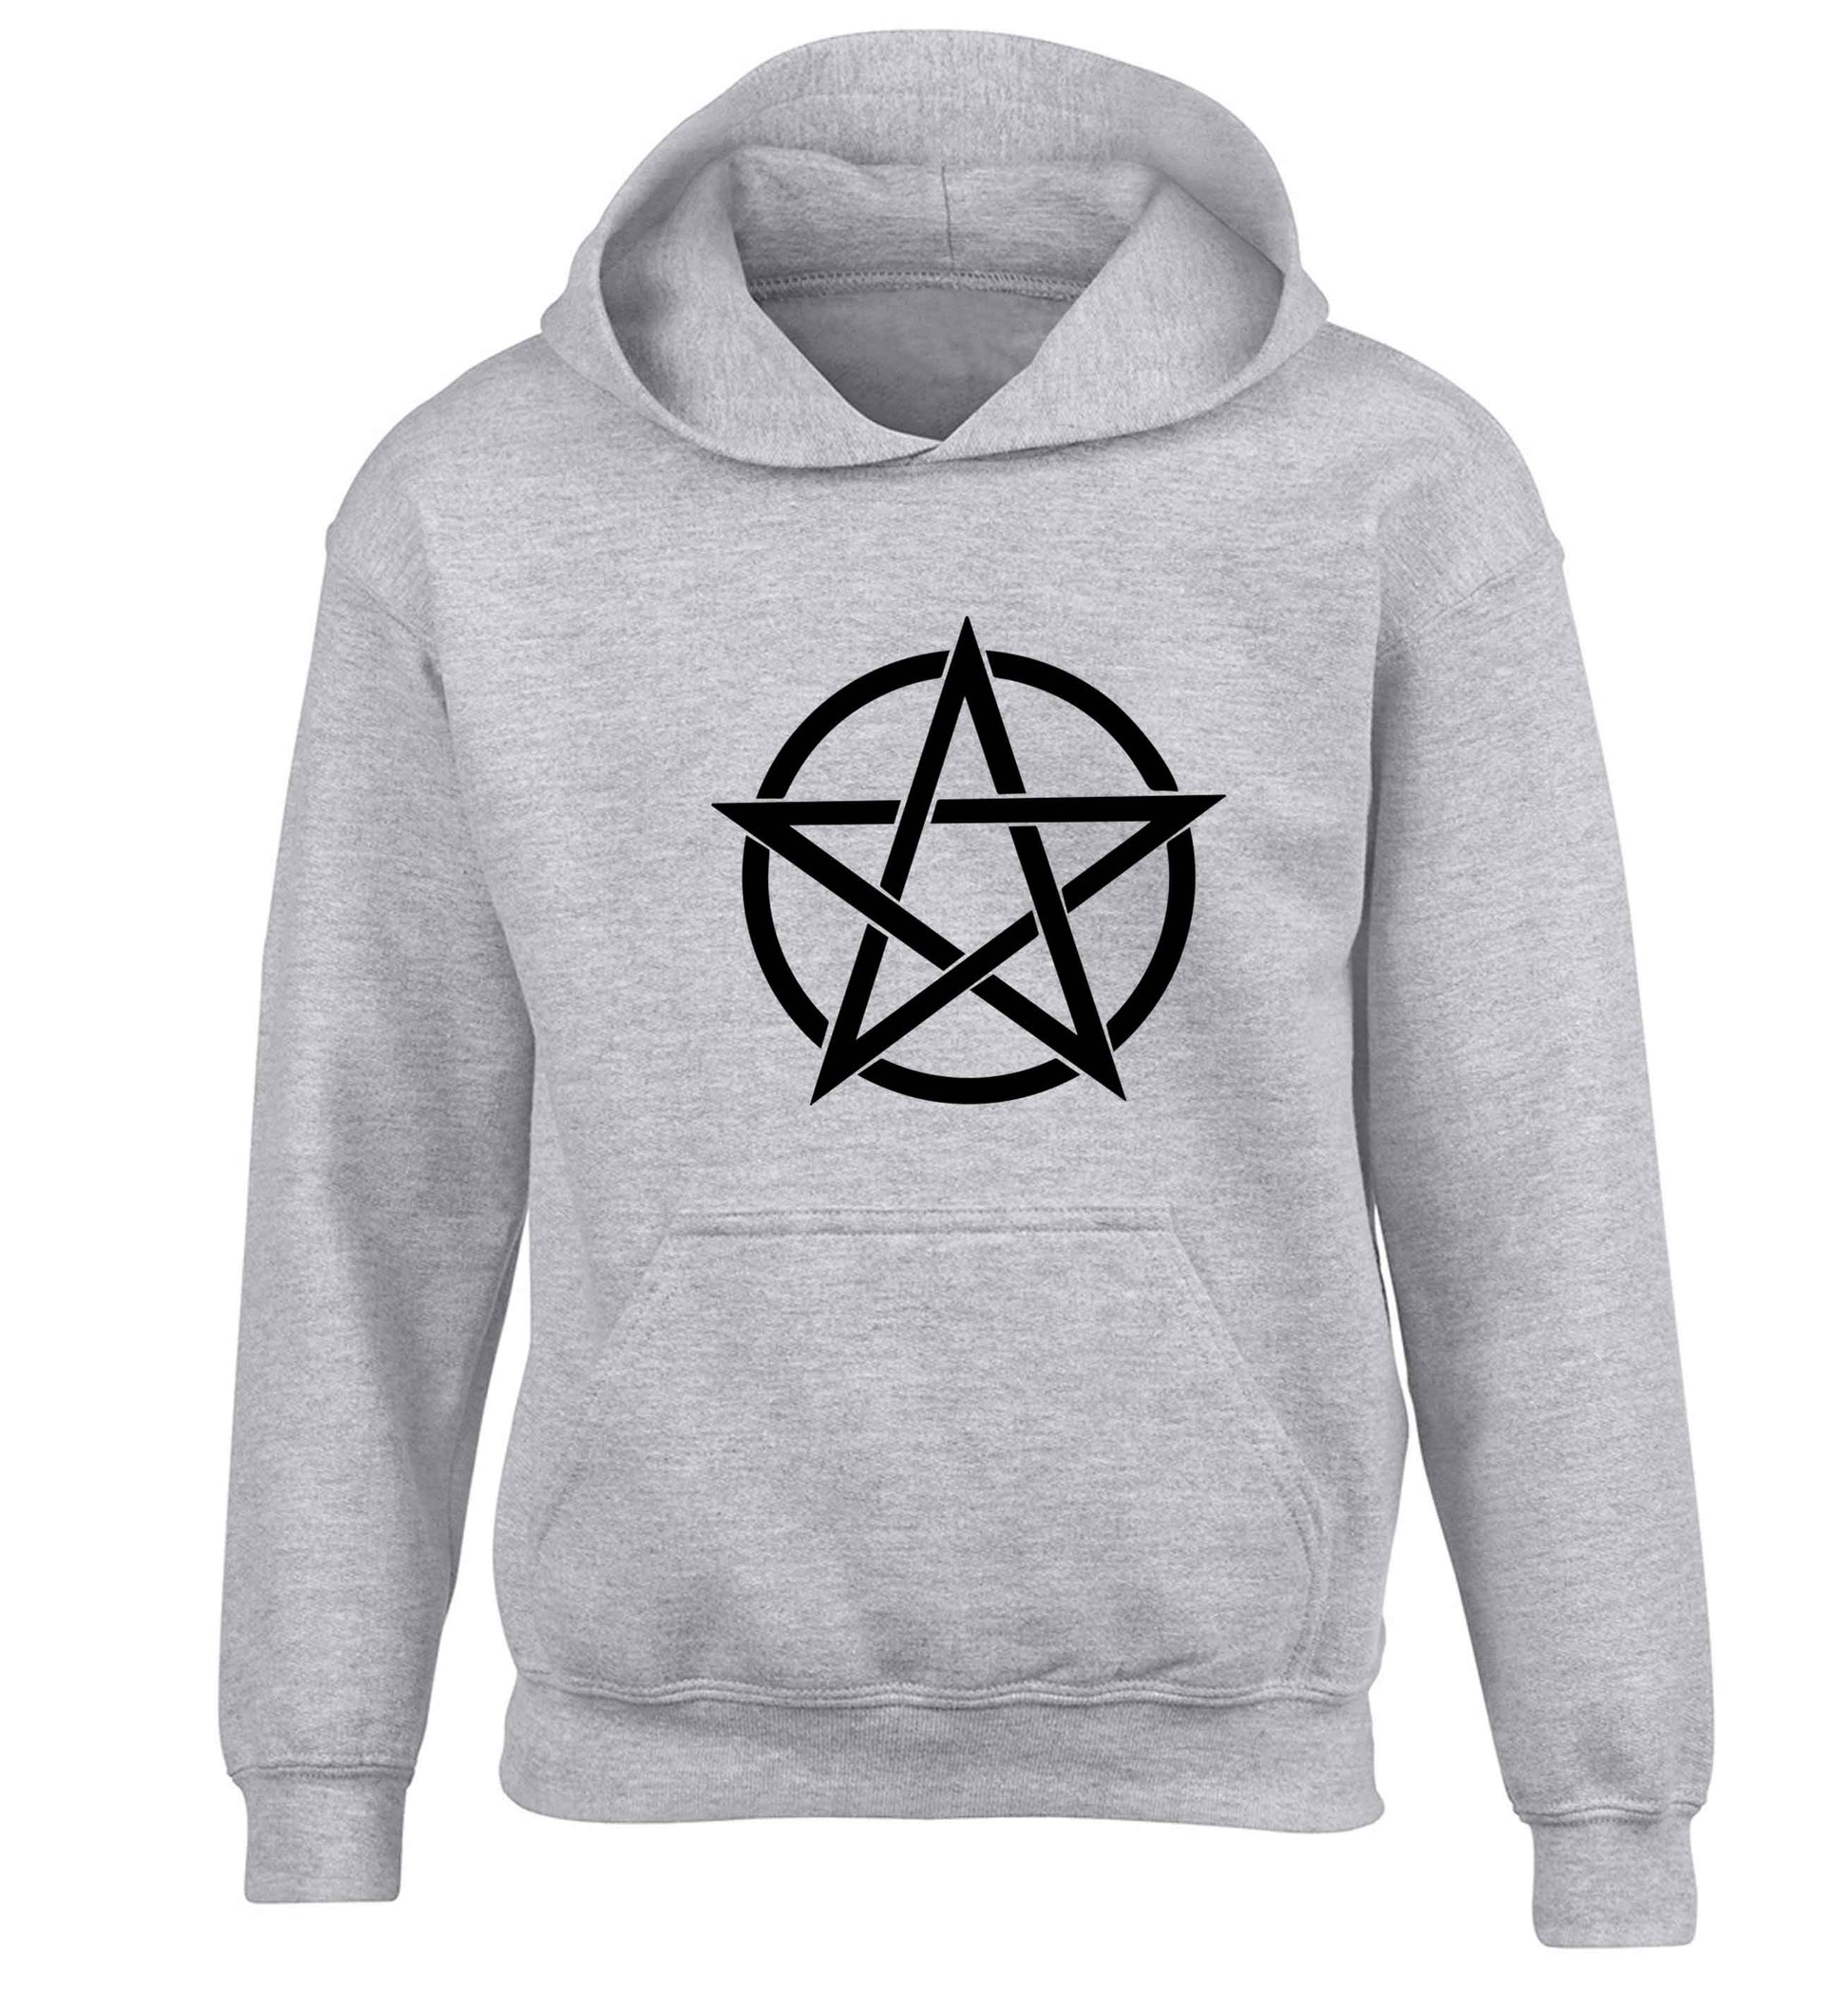 Pentagram symbol children's grey hoodie 12-13 Years